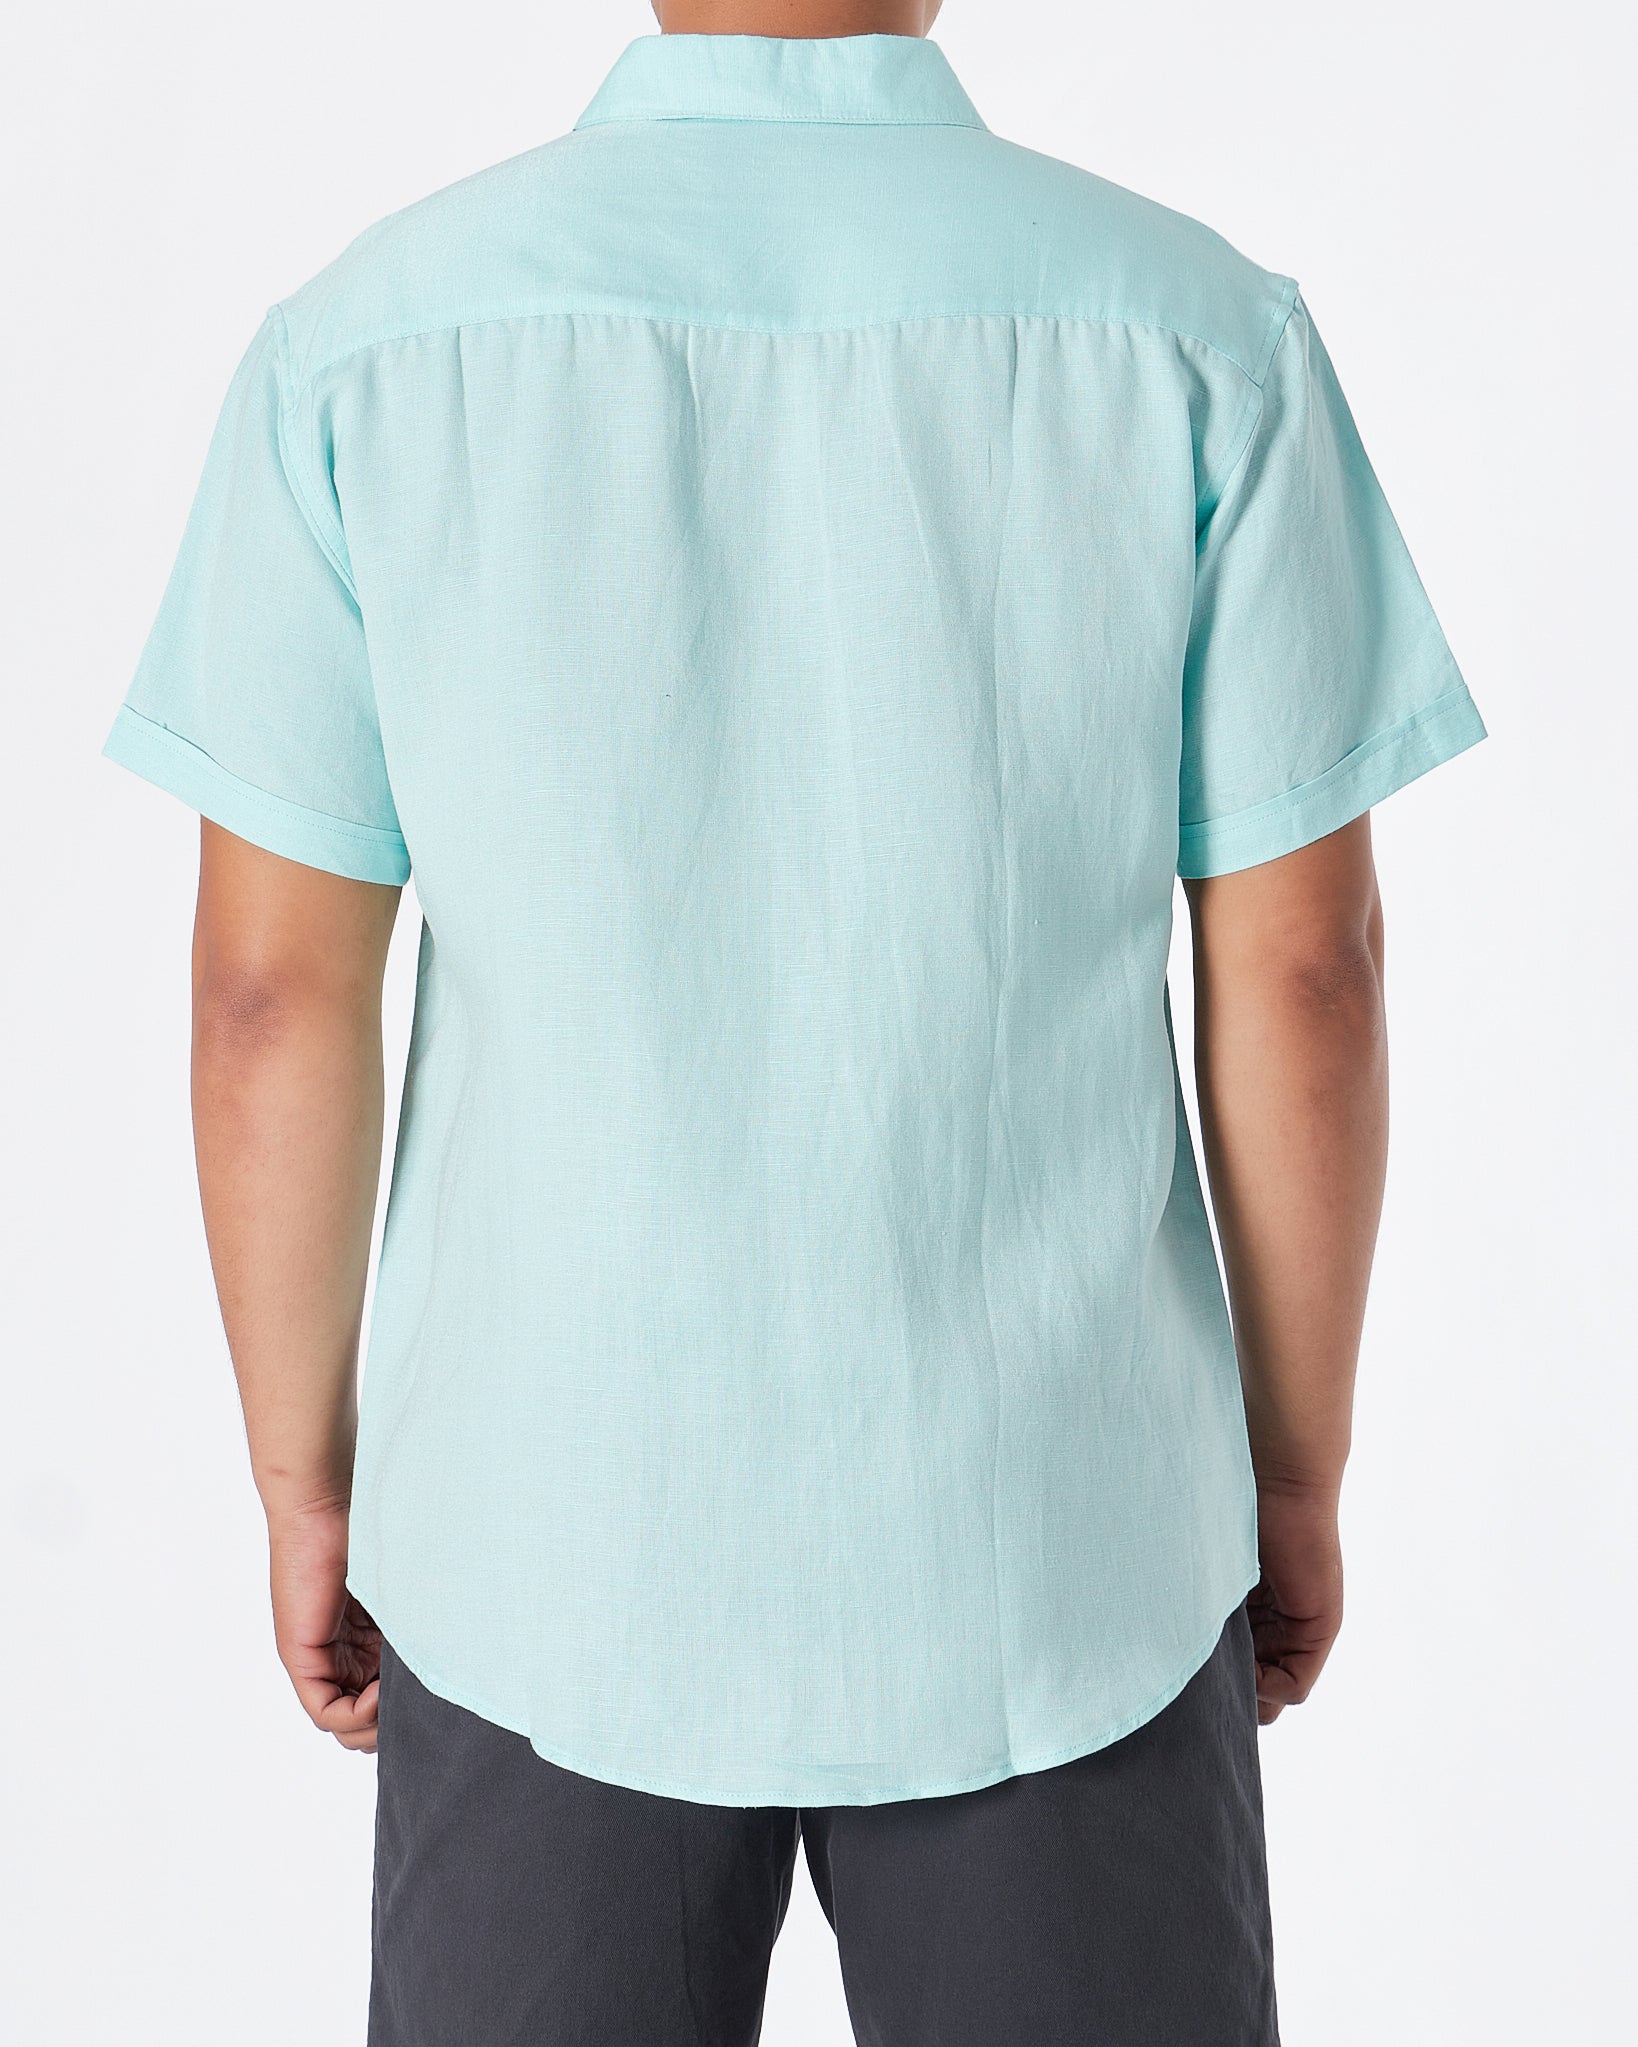 MOI OUTFIT-RL Cotton Men Green Shirts Short Sleeve 28.90